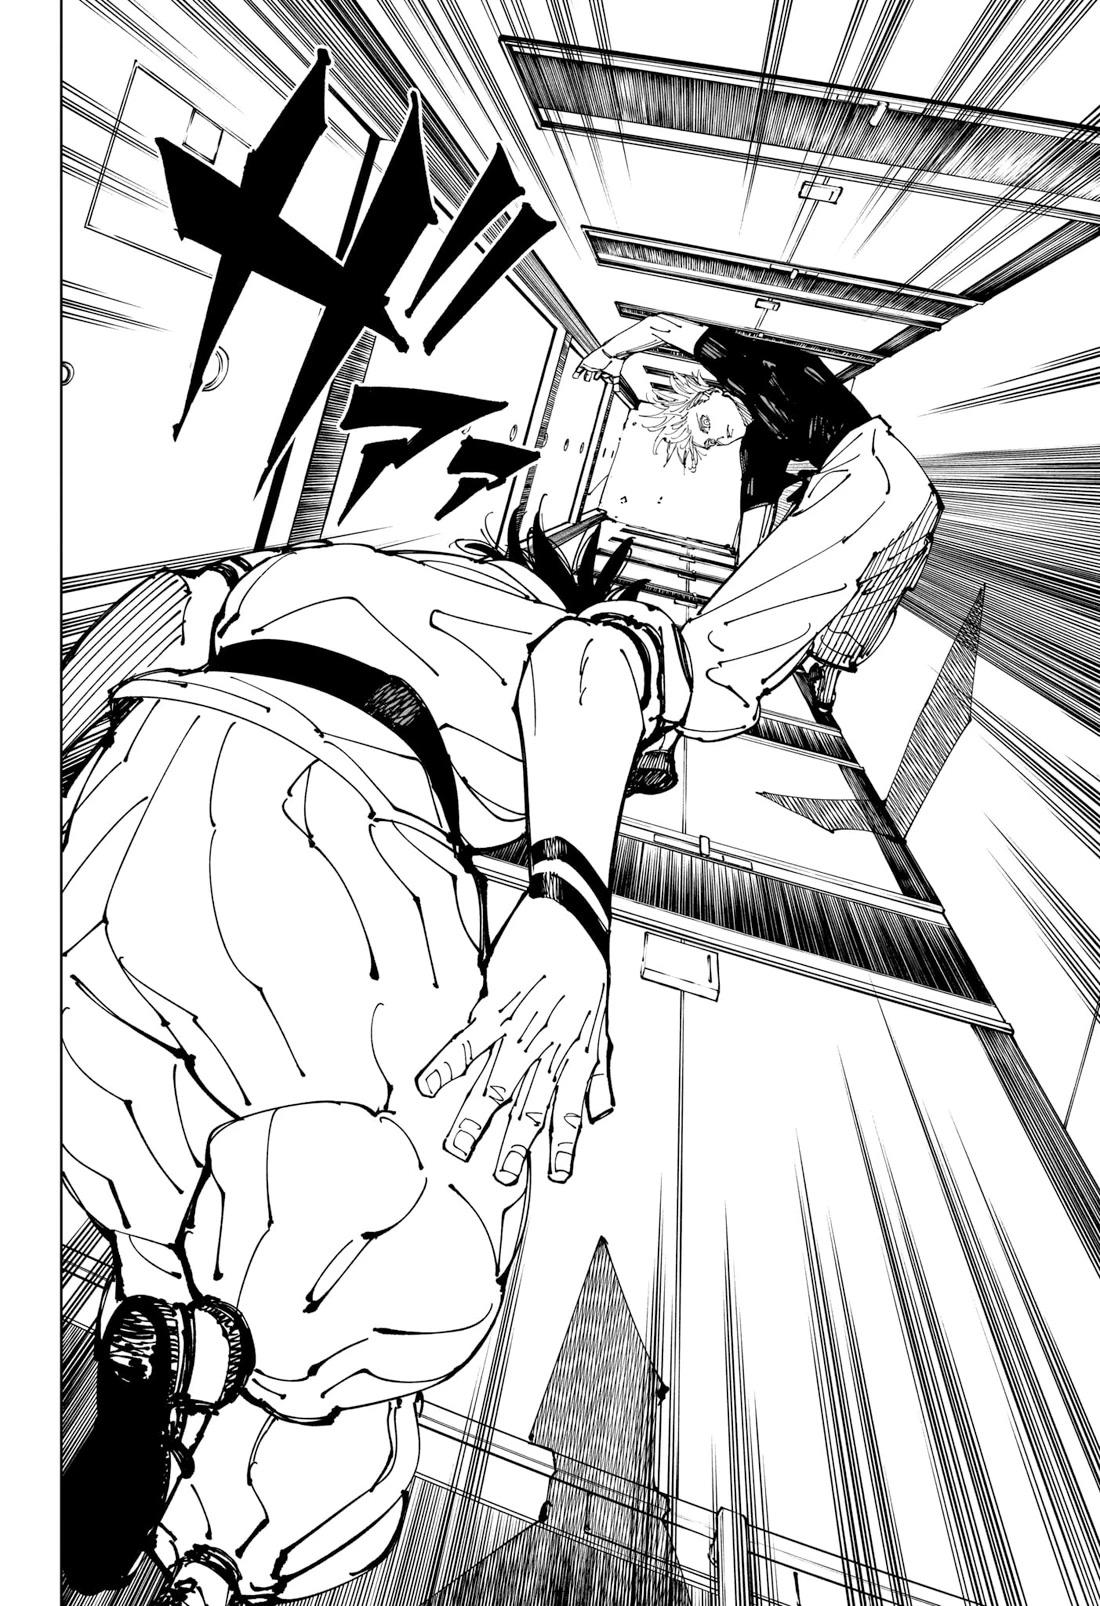 Jujutsu Kaisen Chapter 224: The Decisive Battle In The Uninhabited, Demon-Infested Shinjuku ② page 17 - Mangakakalot